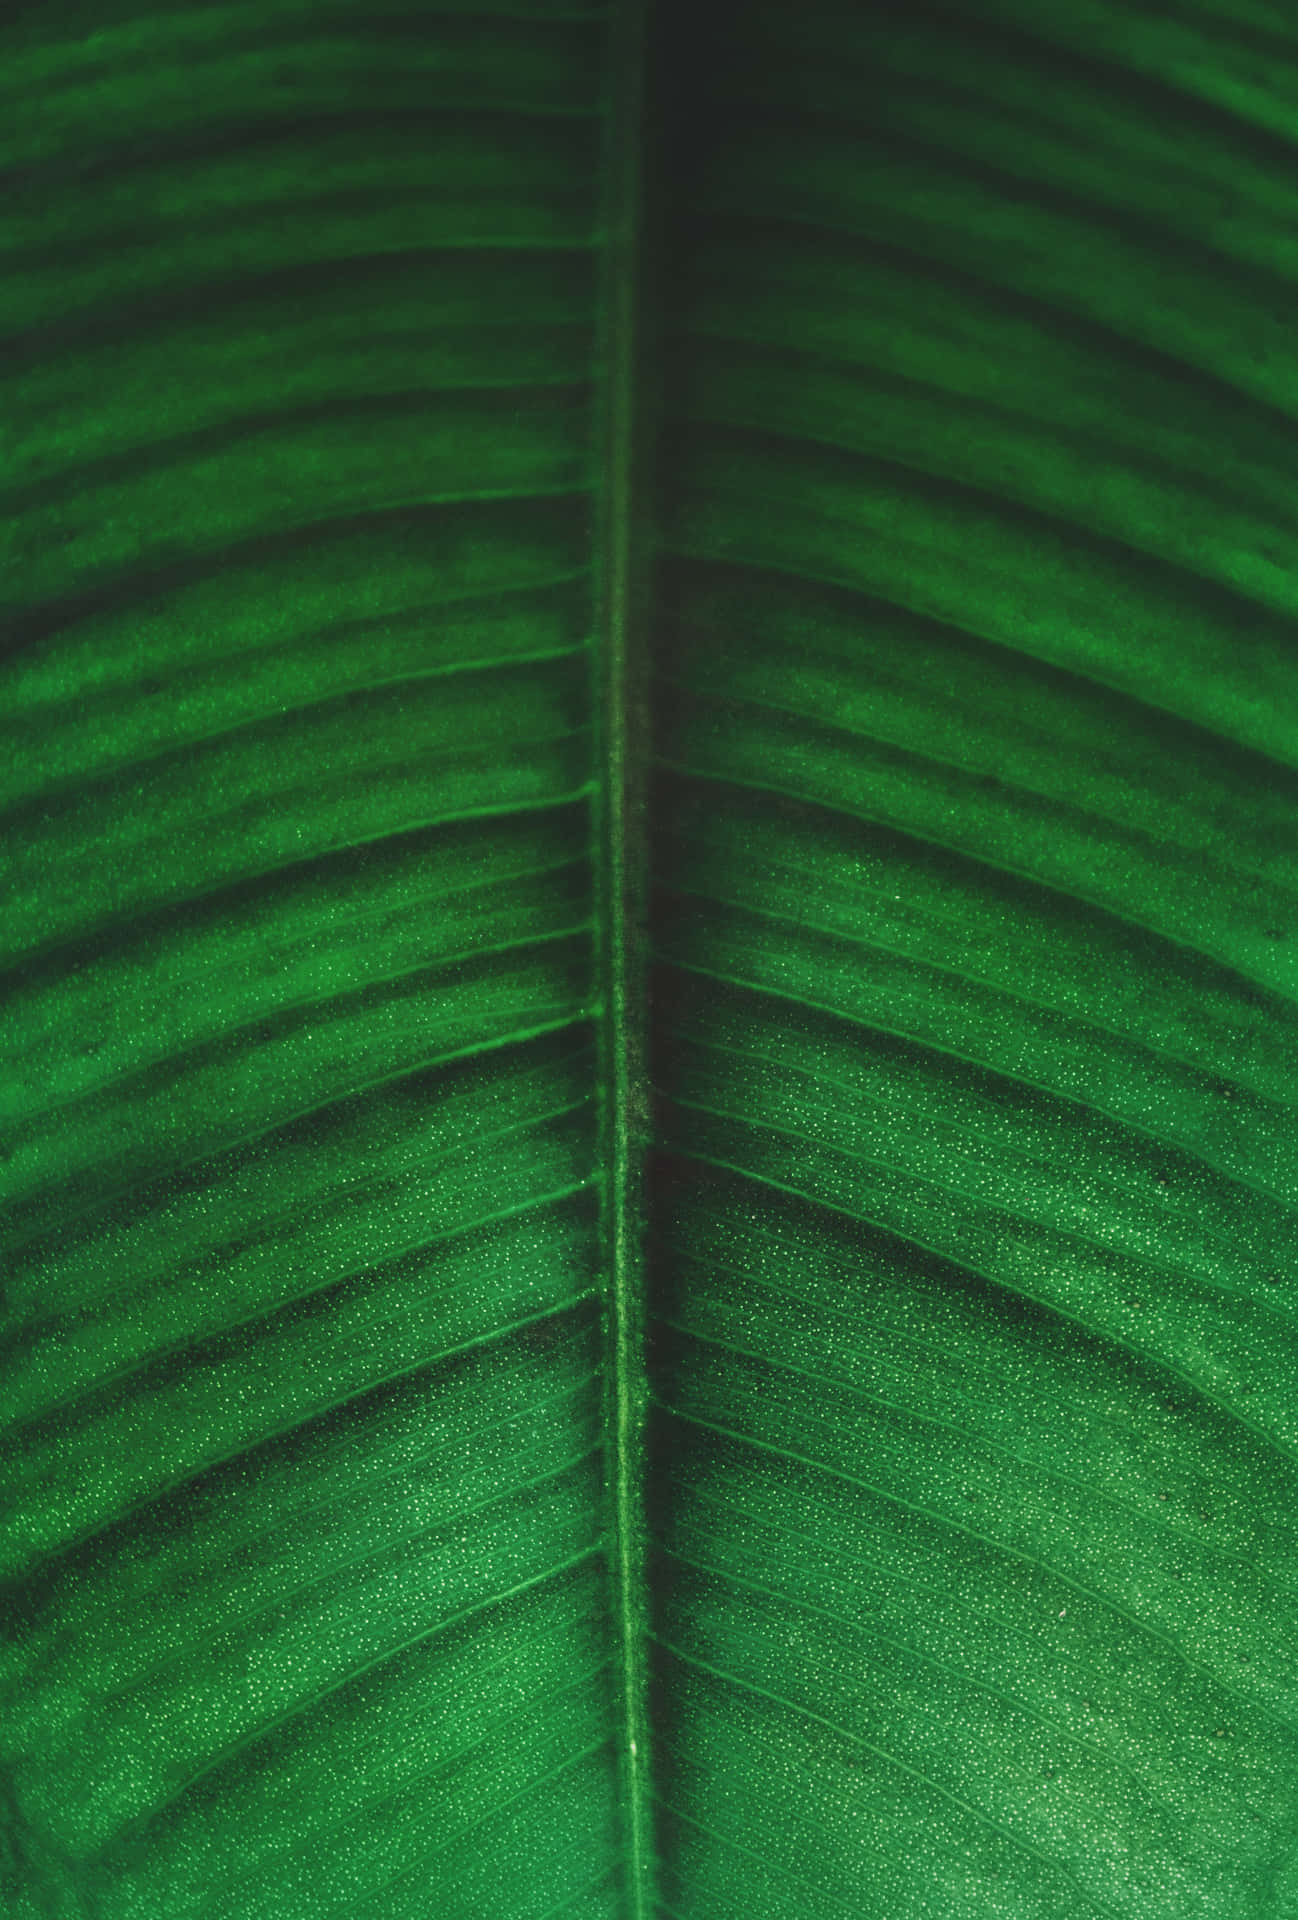 banana leaf against a vibrant summer background